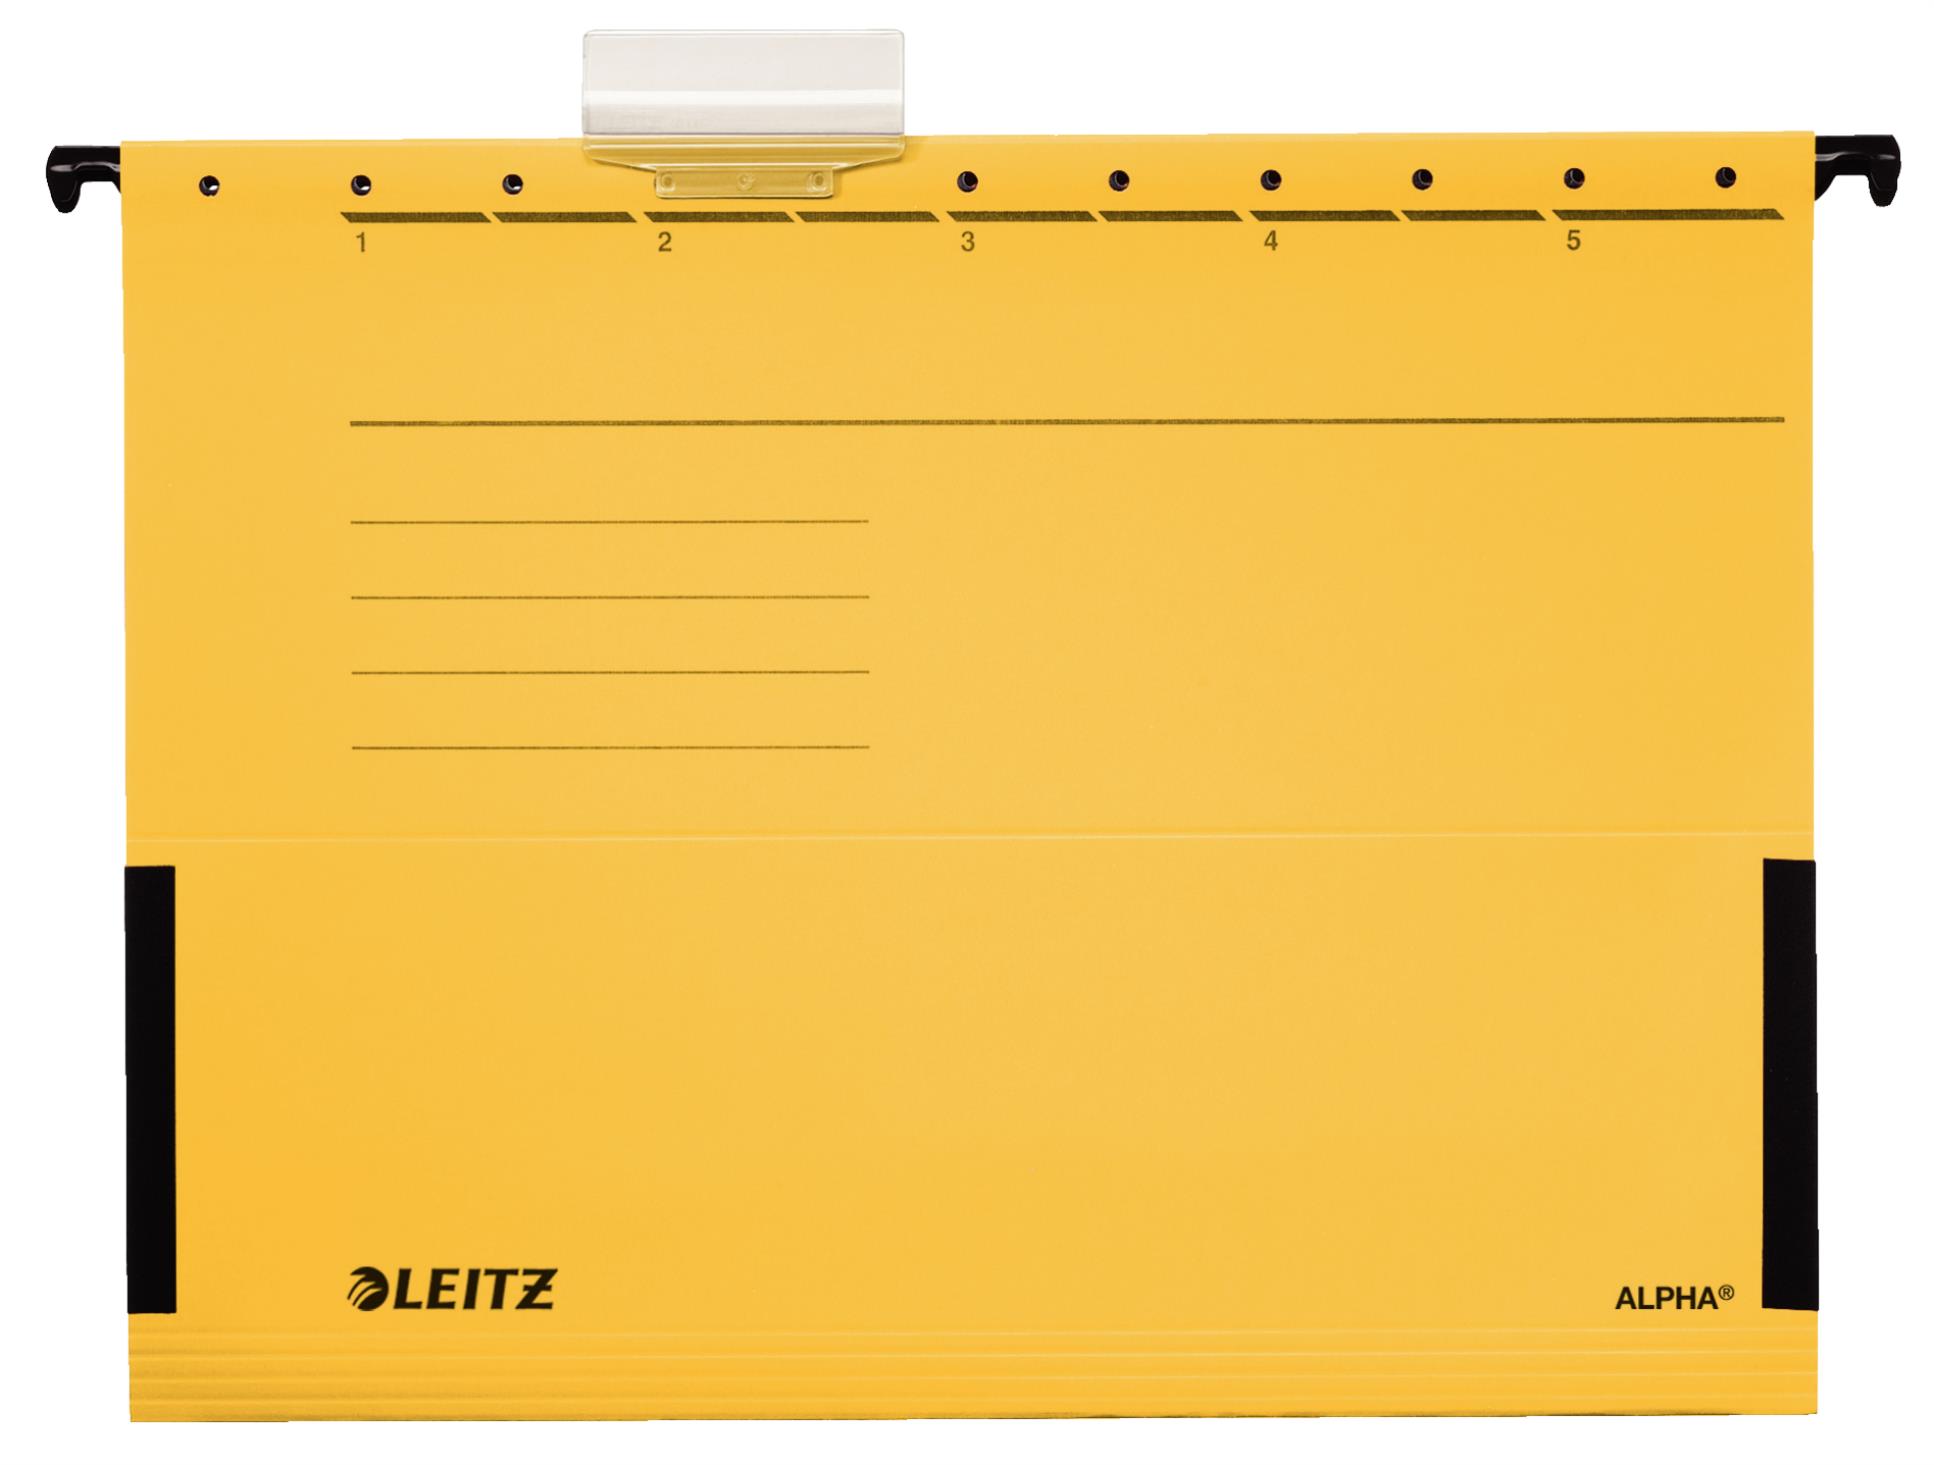 Desky závěsné Leitz Alpha s bočnicemi žluté, 25 ks